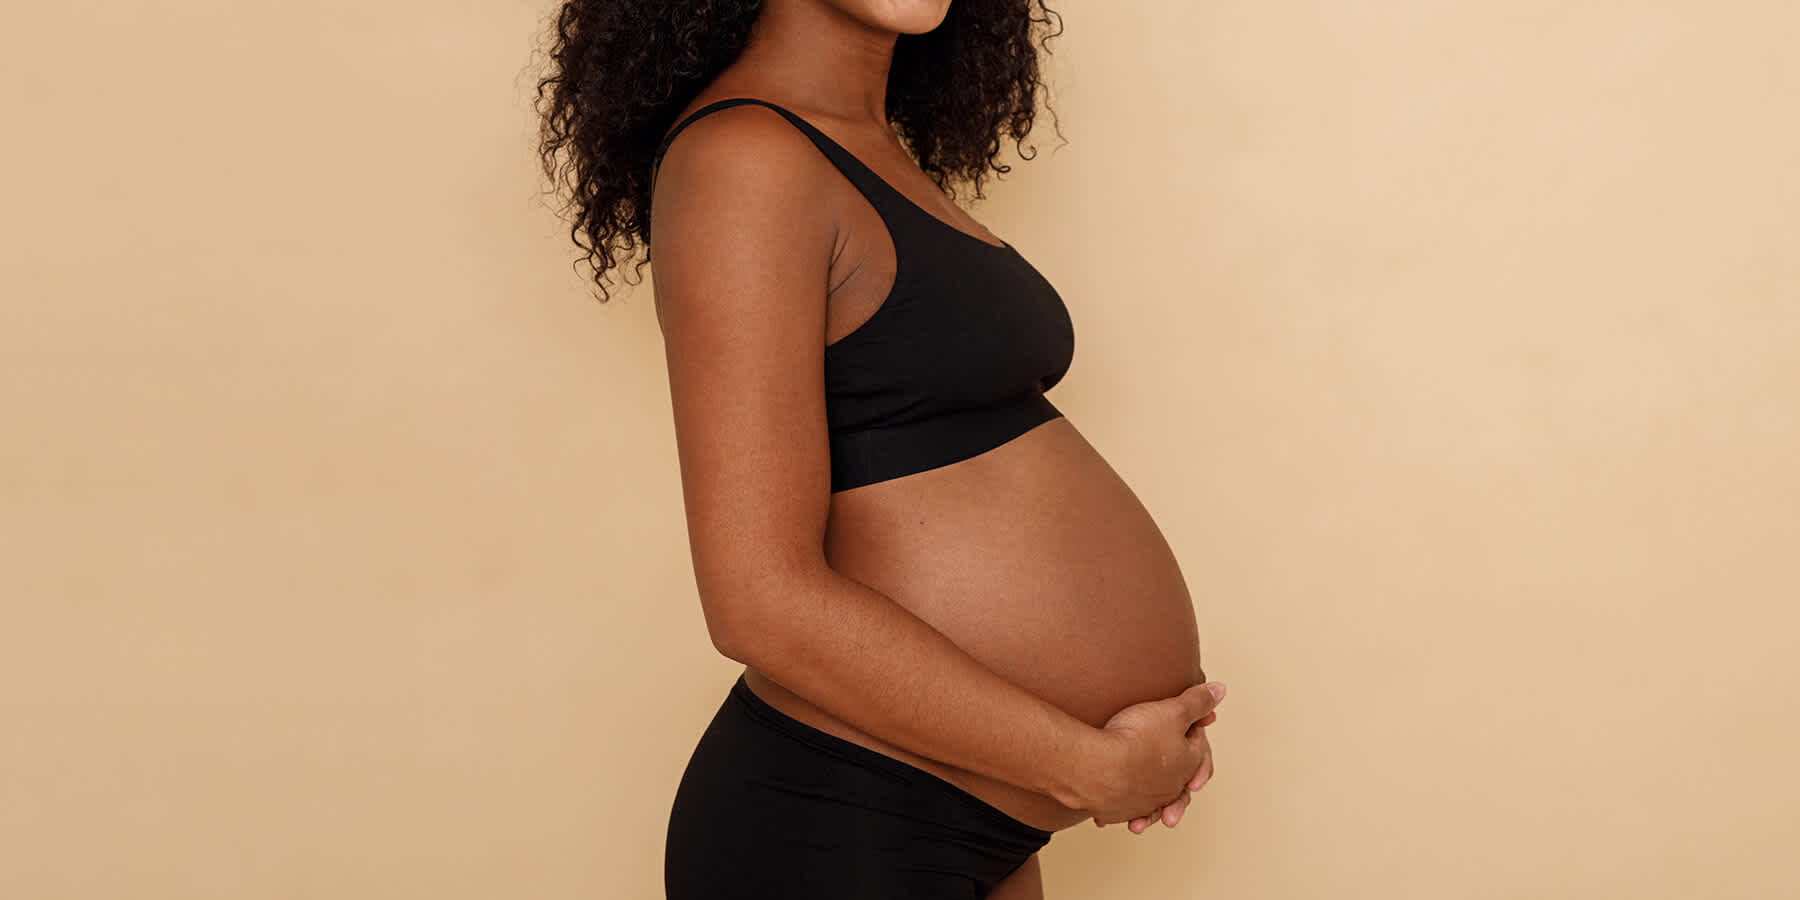 Woman managing HIV in pregnancy